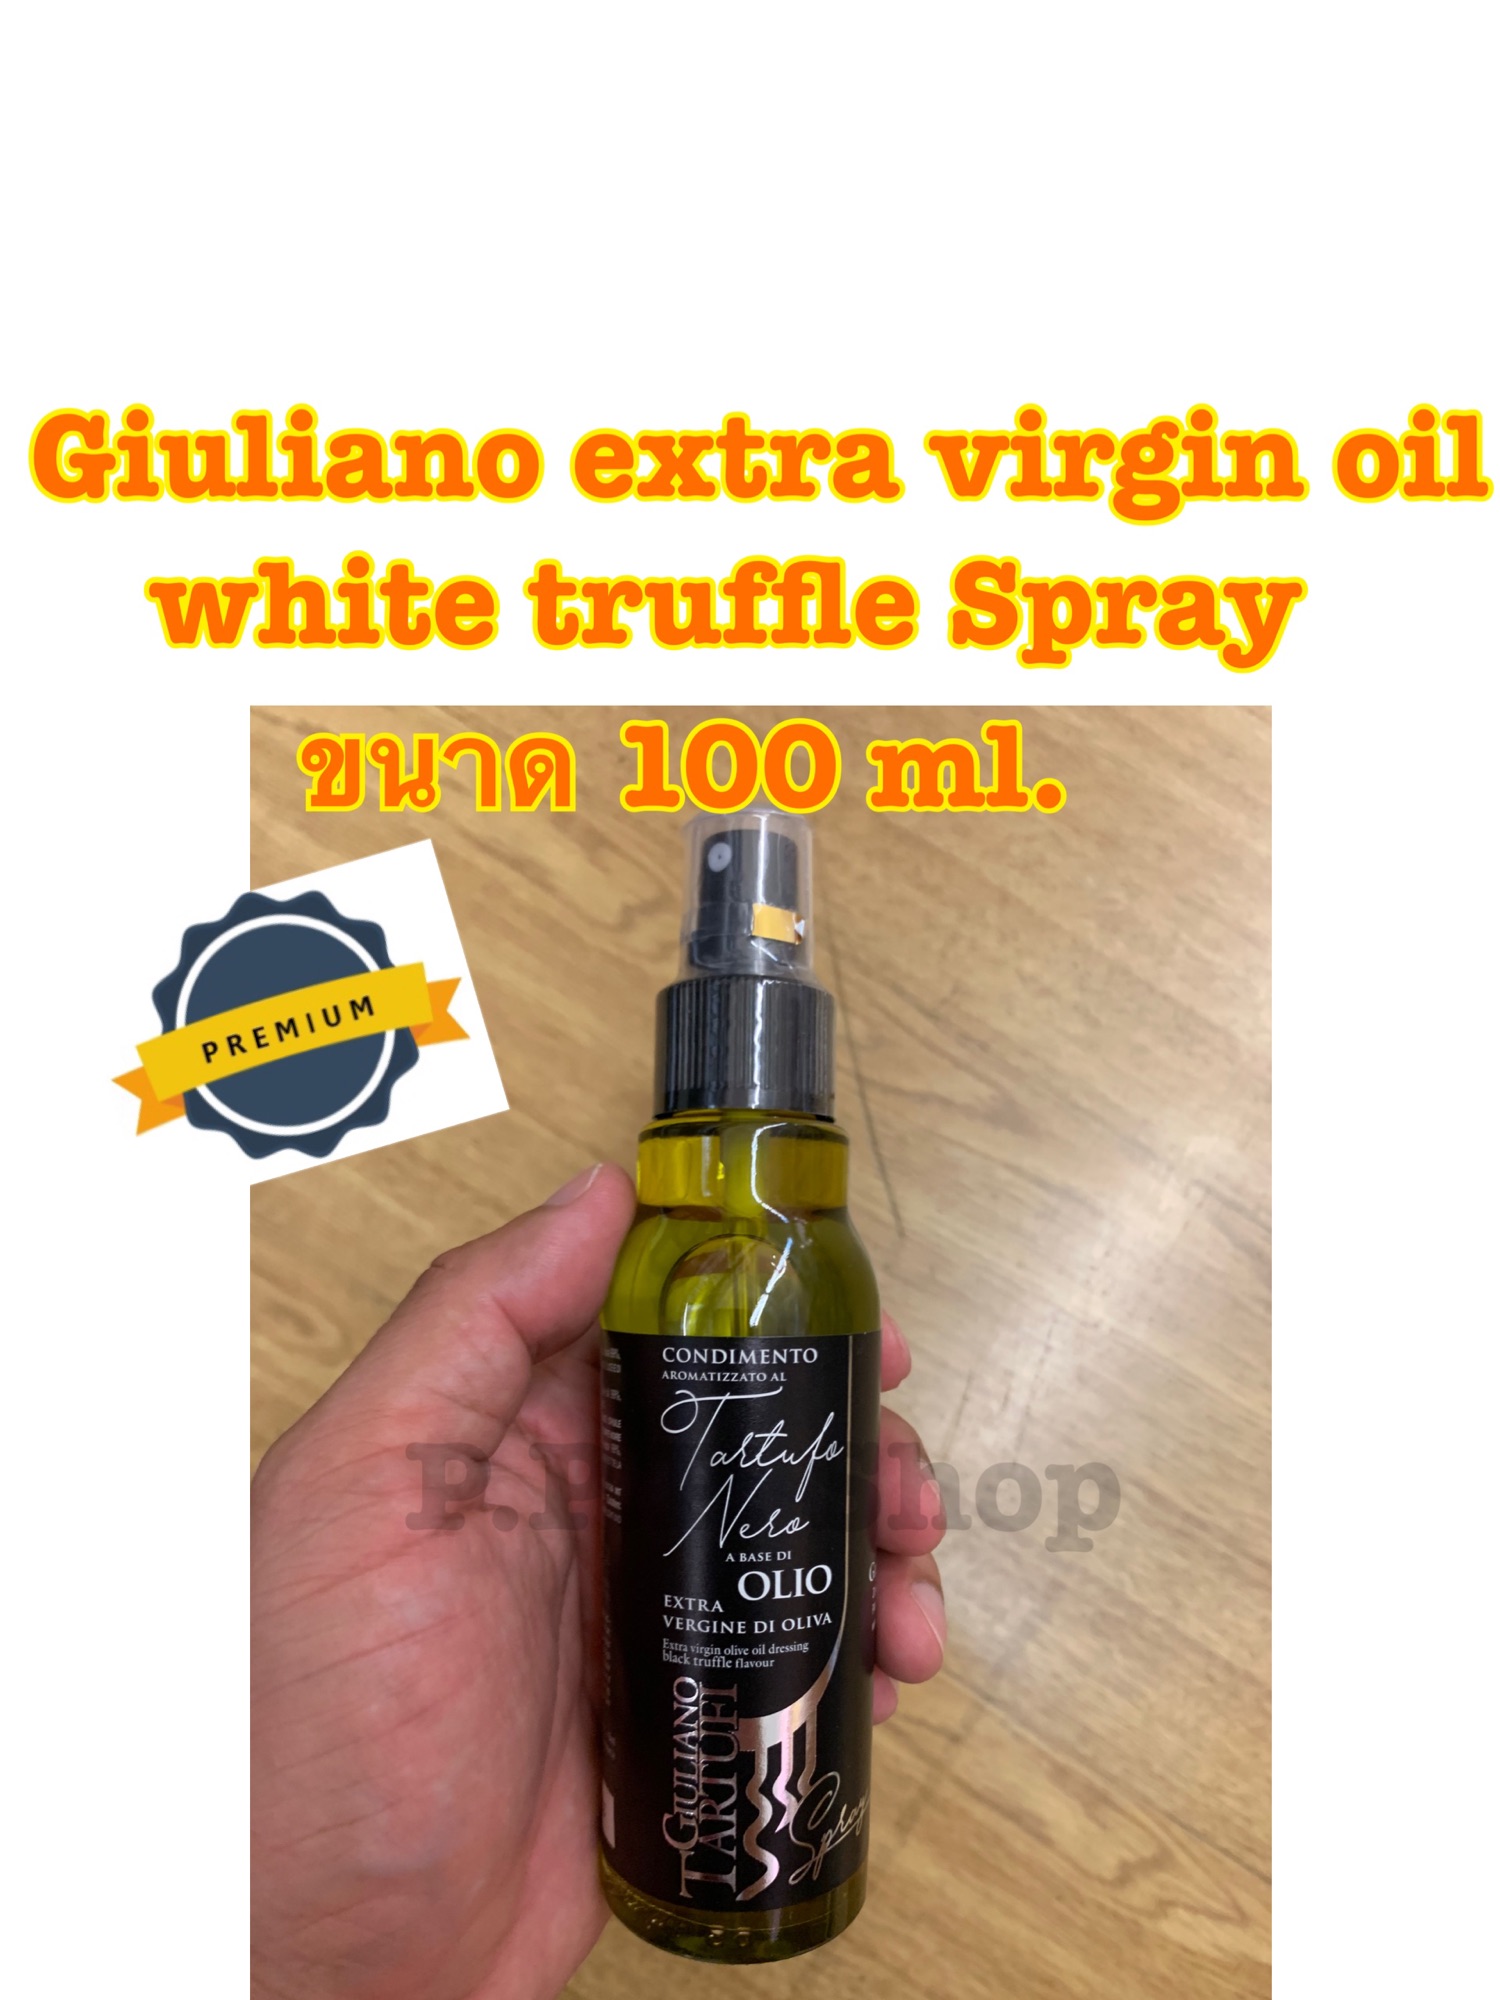 Giuliano extra virgin oil white truffle Spray น้ำมันมะกอก เห็ดทรัฟเฟิลขาว เเบบ สเปร์ ขนาด 100 ml.